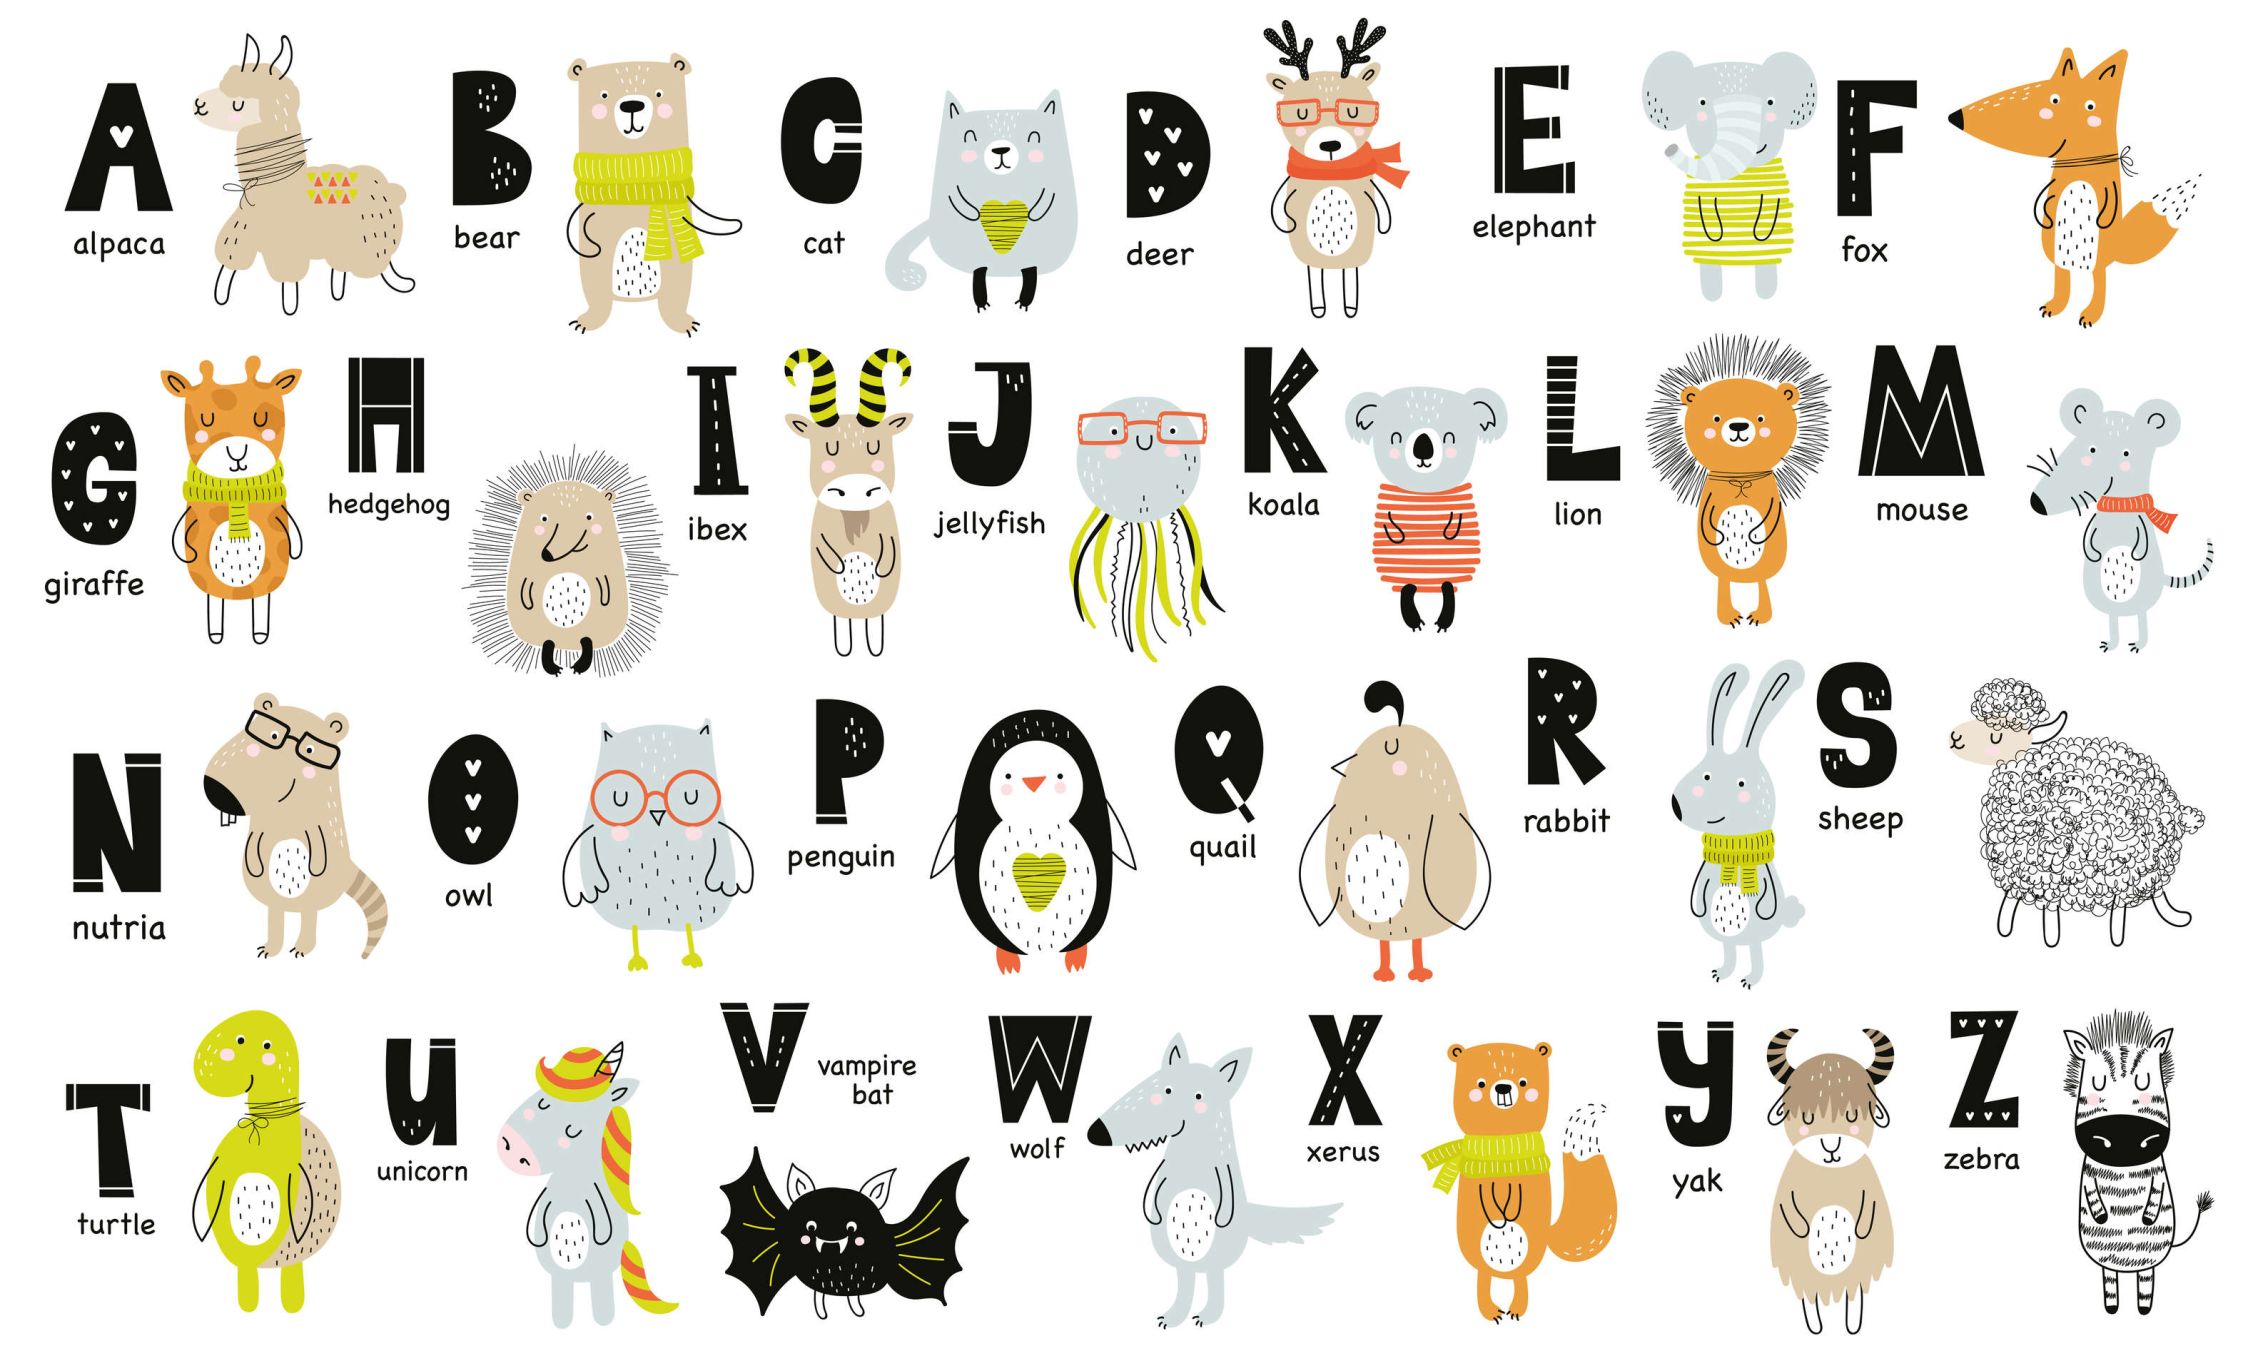             Photo wallpaper Alphabet with animals and animal names - Smooth & matt non-woven
        